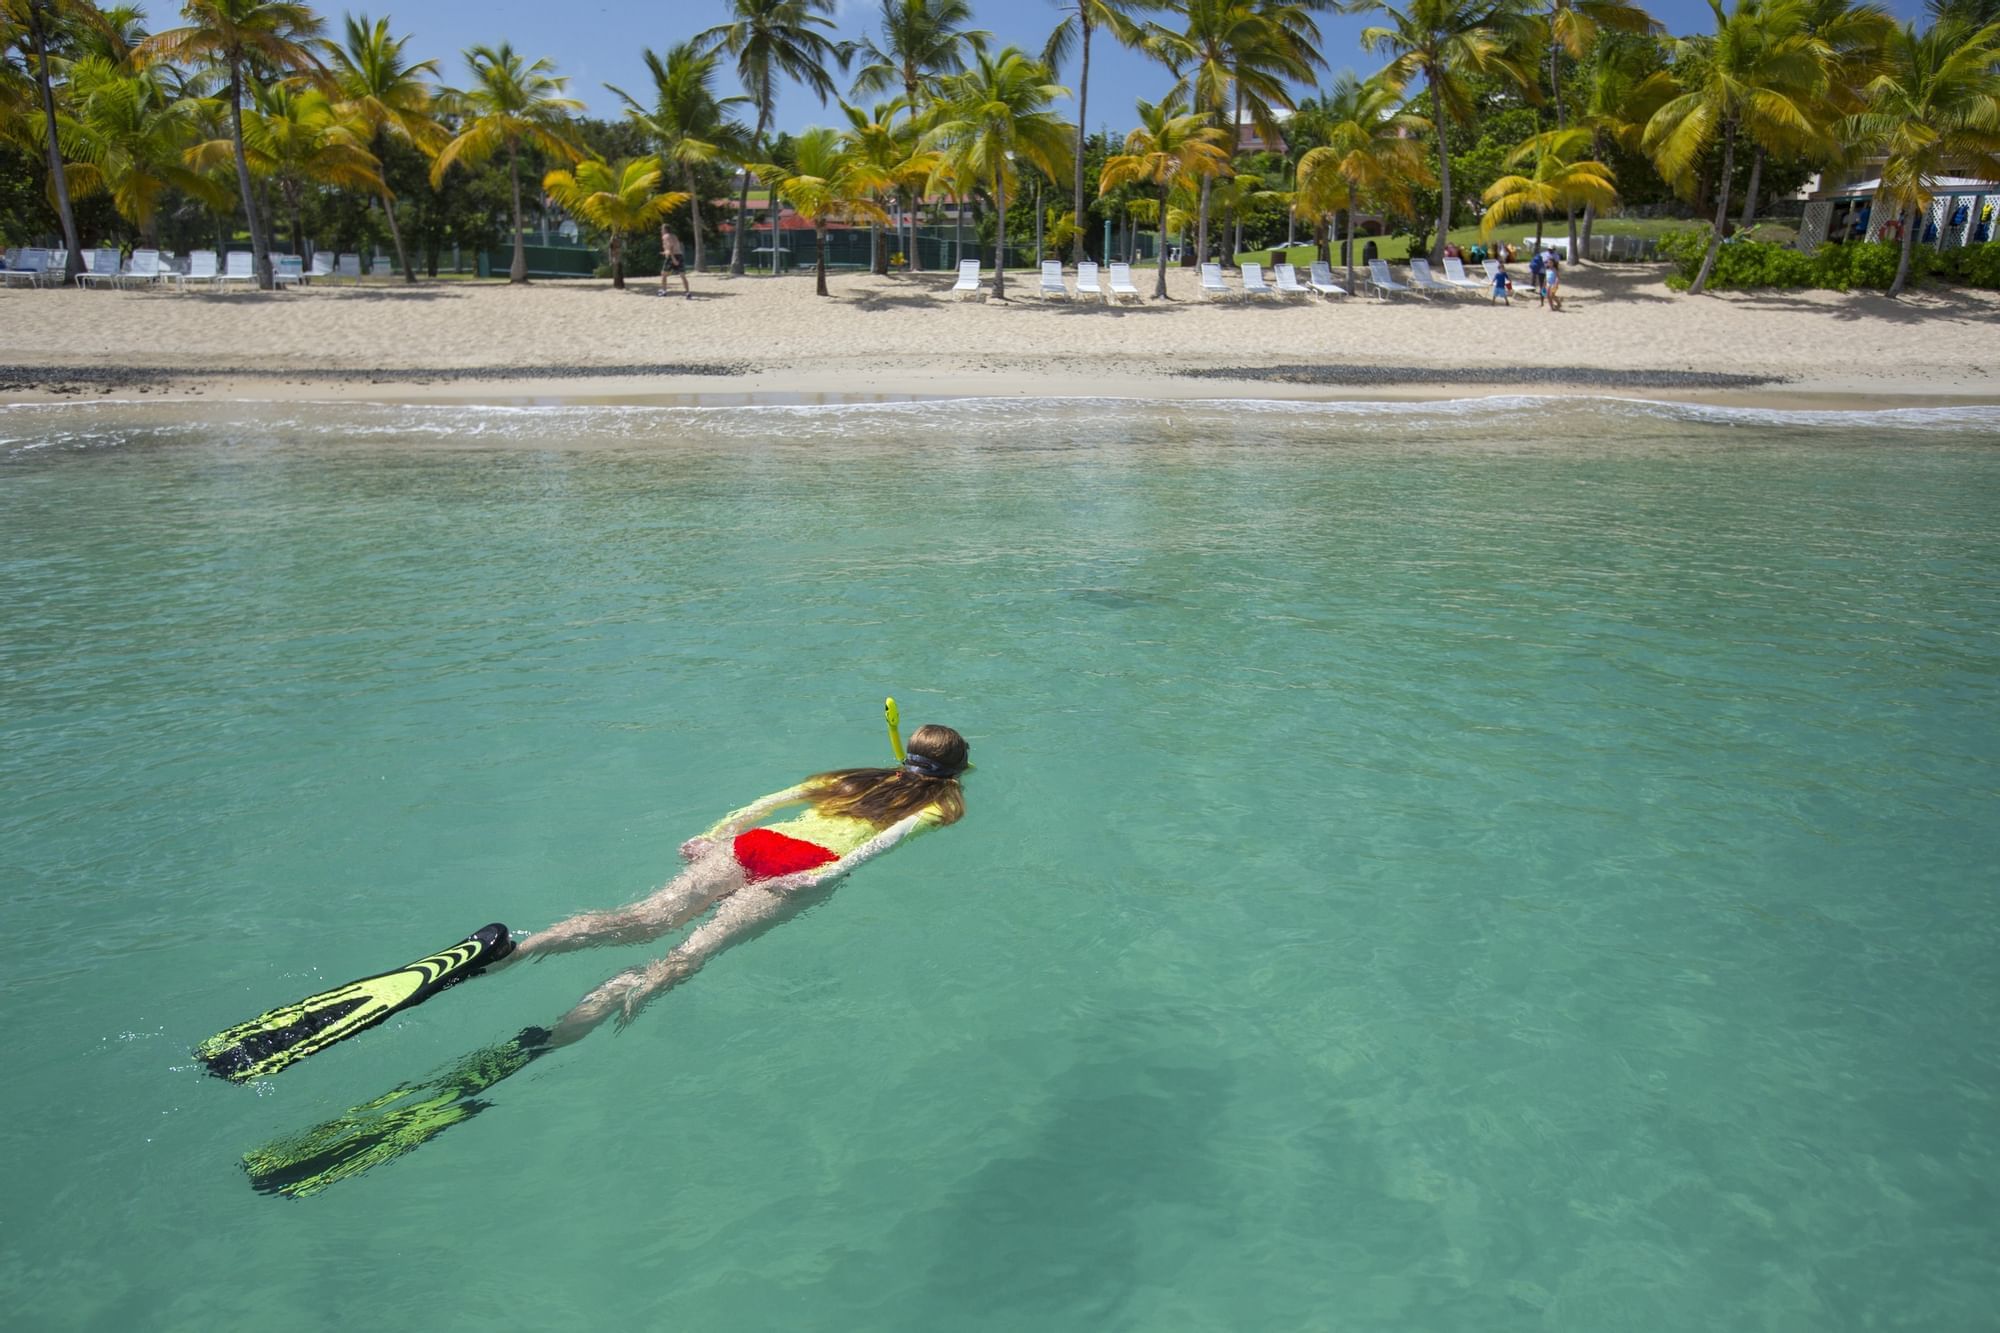 A woman snorkeling in the ocean near The Buccaneer Hotel